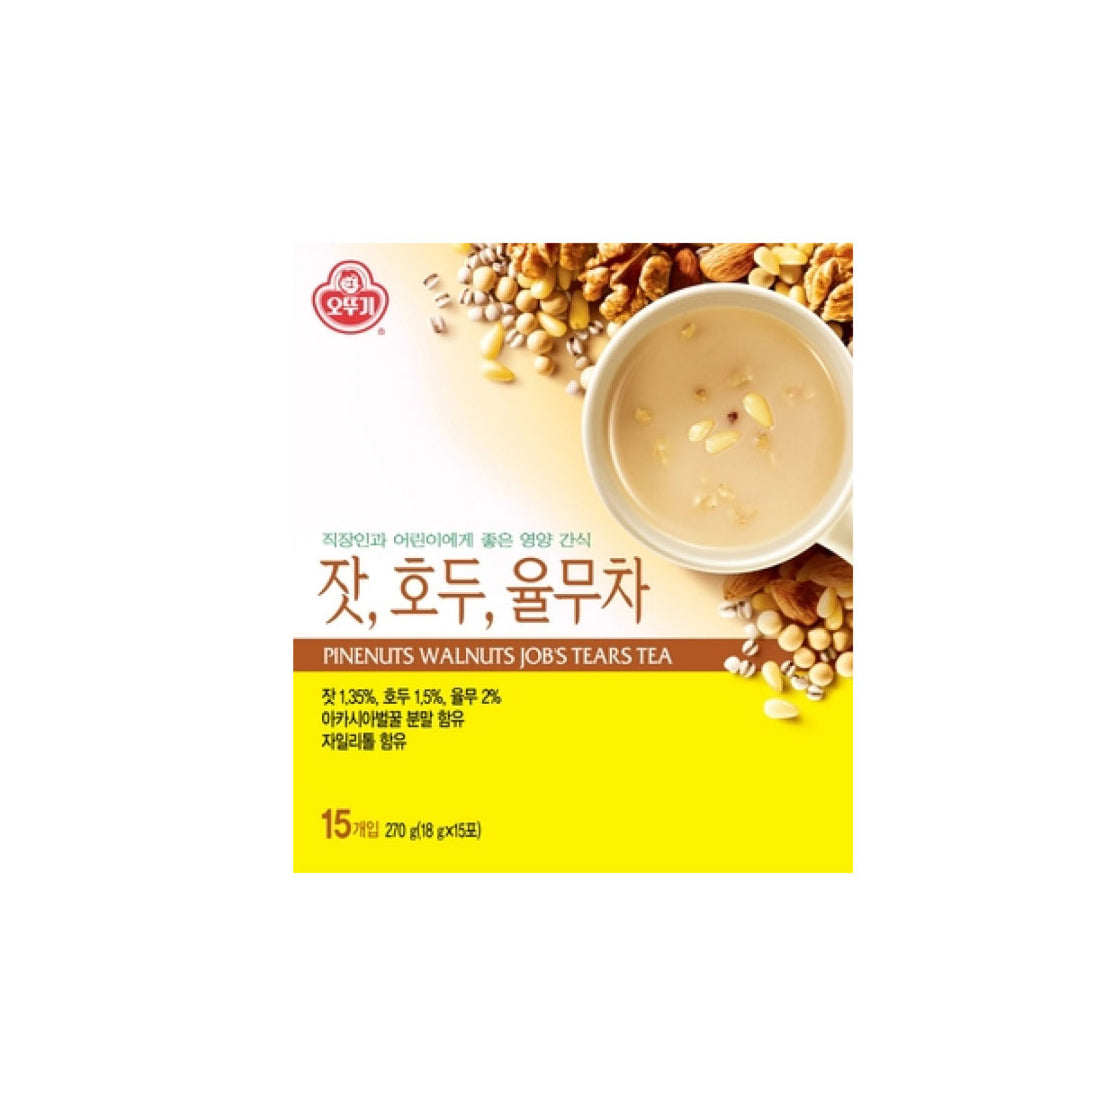 Pine Nut Walnut & Job's Tear Tea 24/15/18g 삼화 잣호두율무차